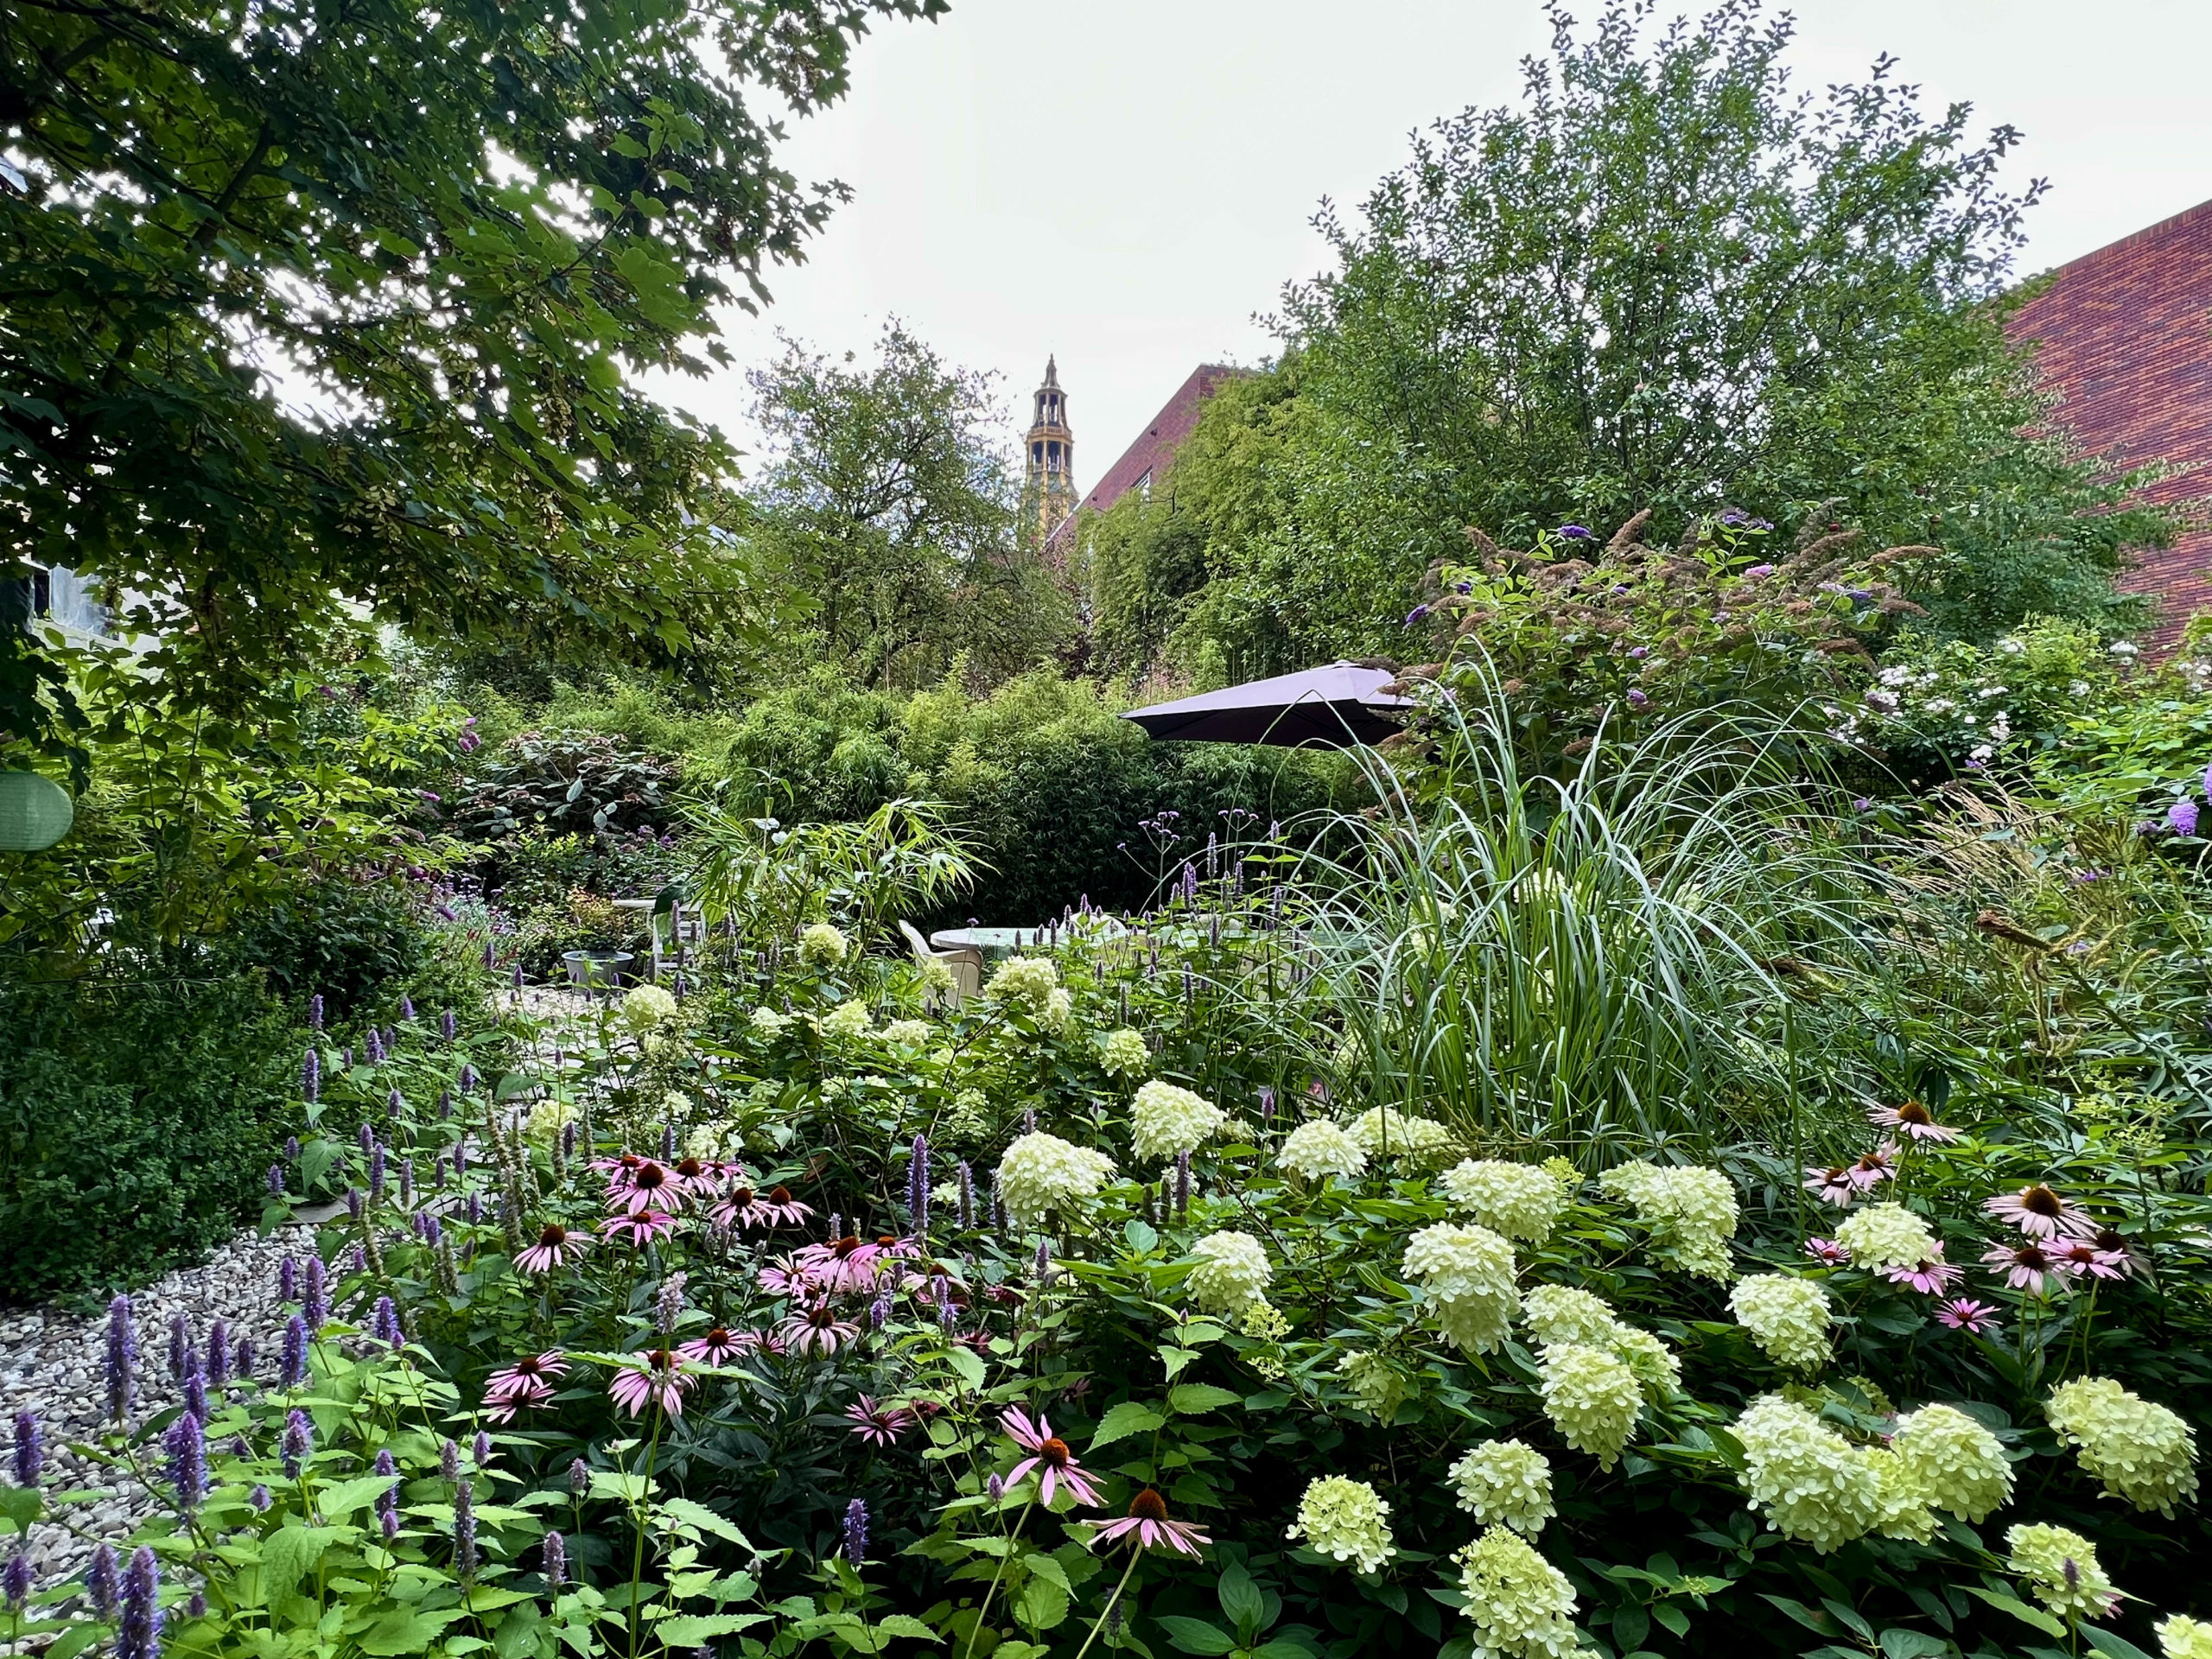 verborgen stadstuin groene tuin kleine tuin binnentuin natuurlijke tuin quiet city garden Groningen tuinontwerp Tuinen van Thomas Caroline Thomas